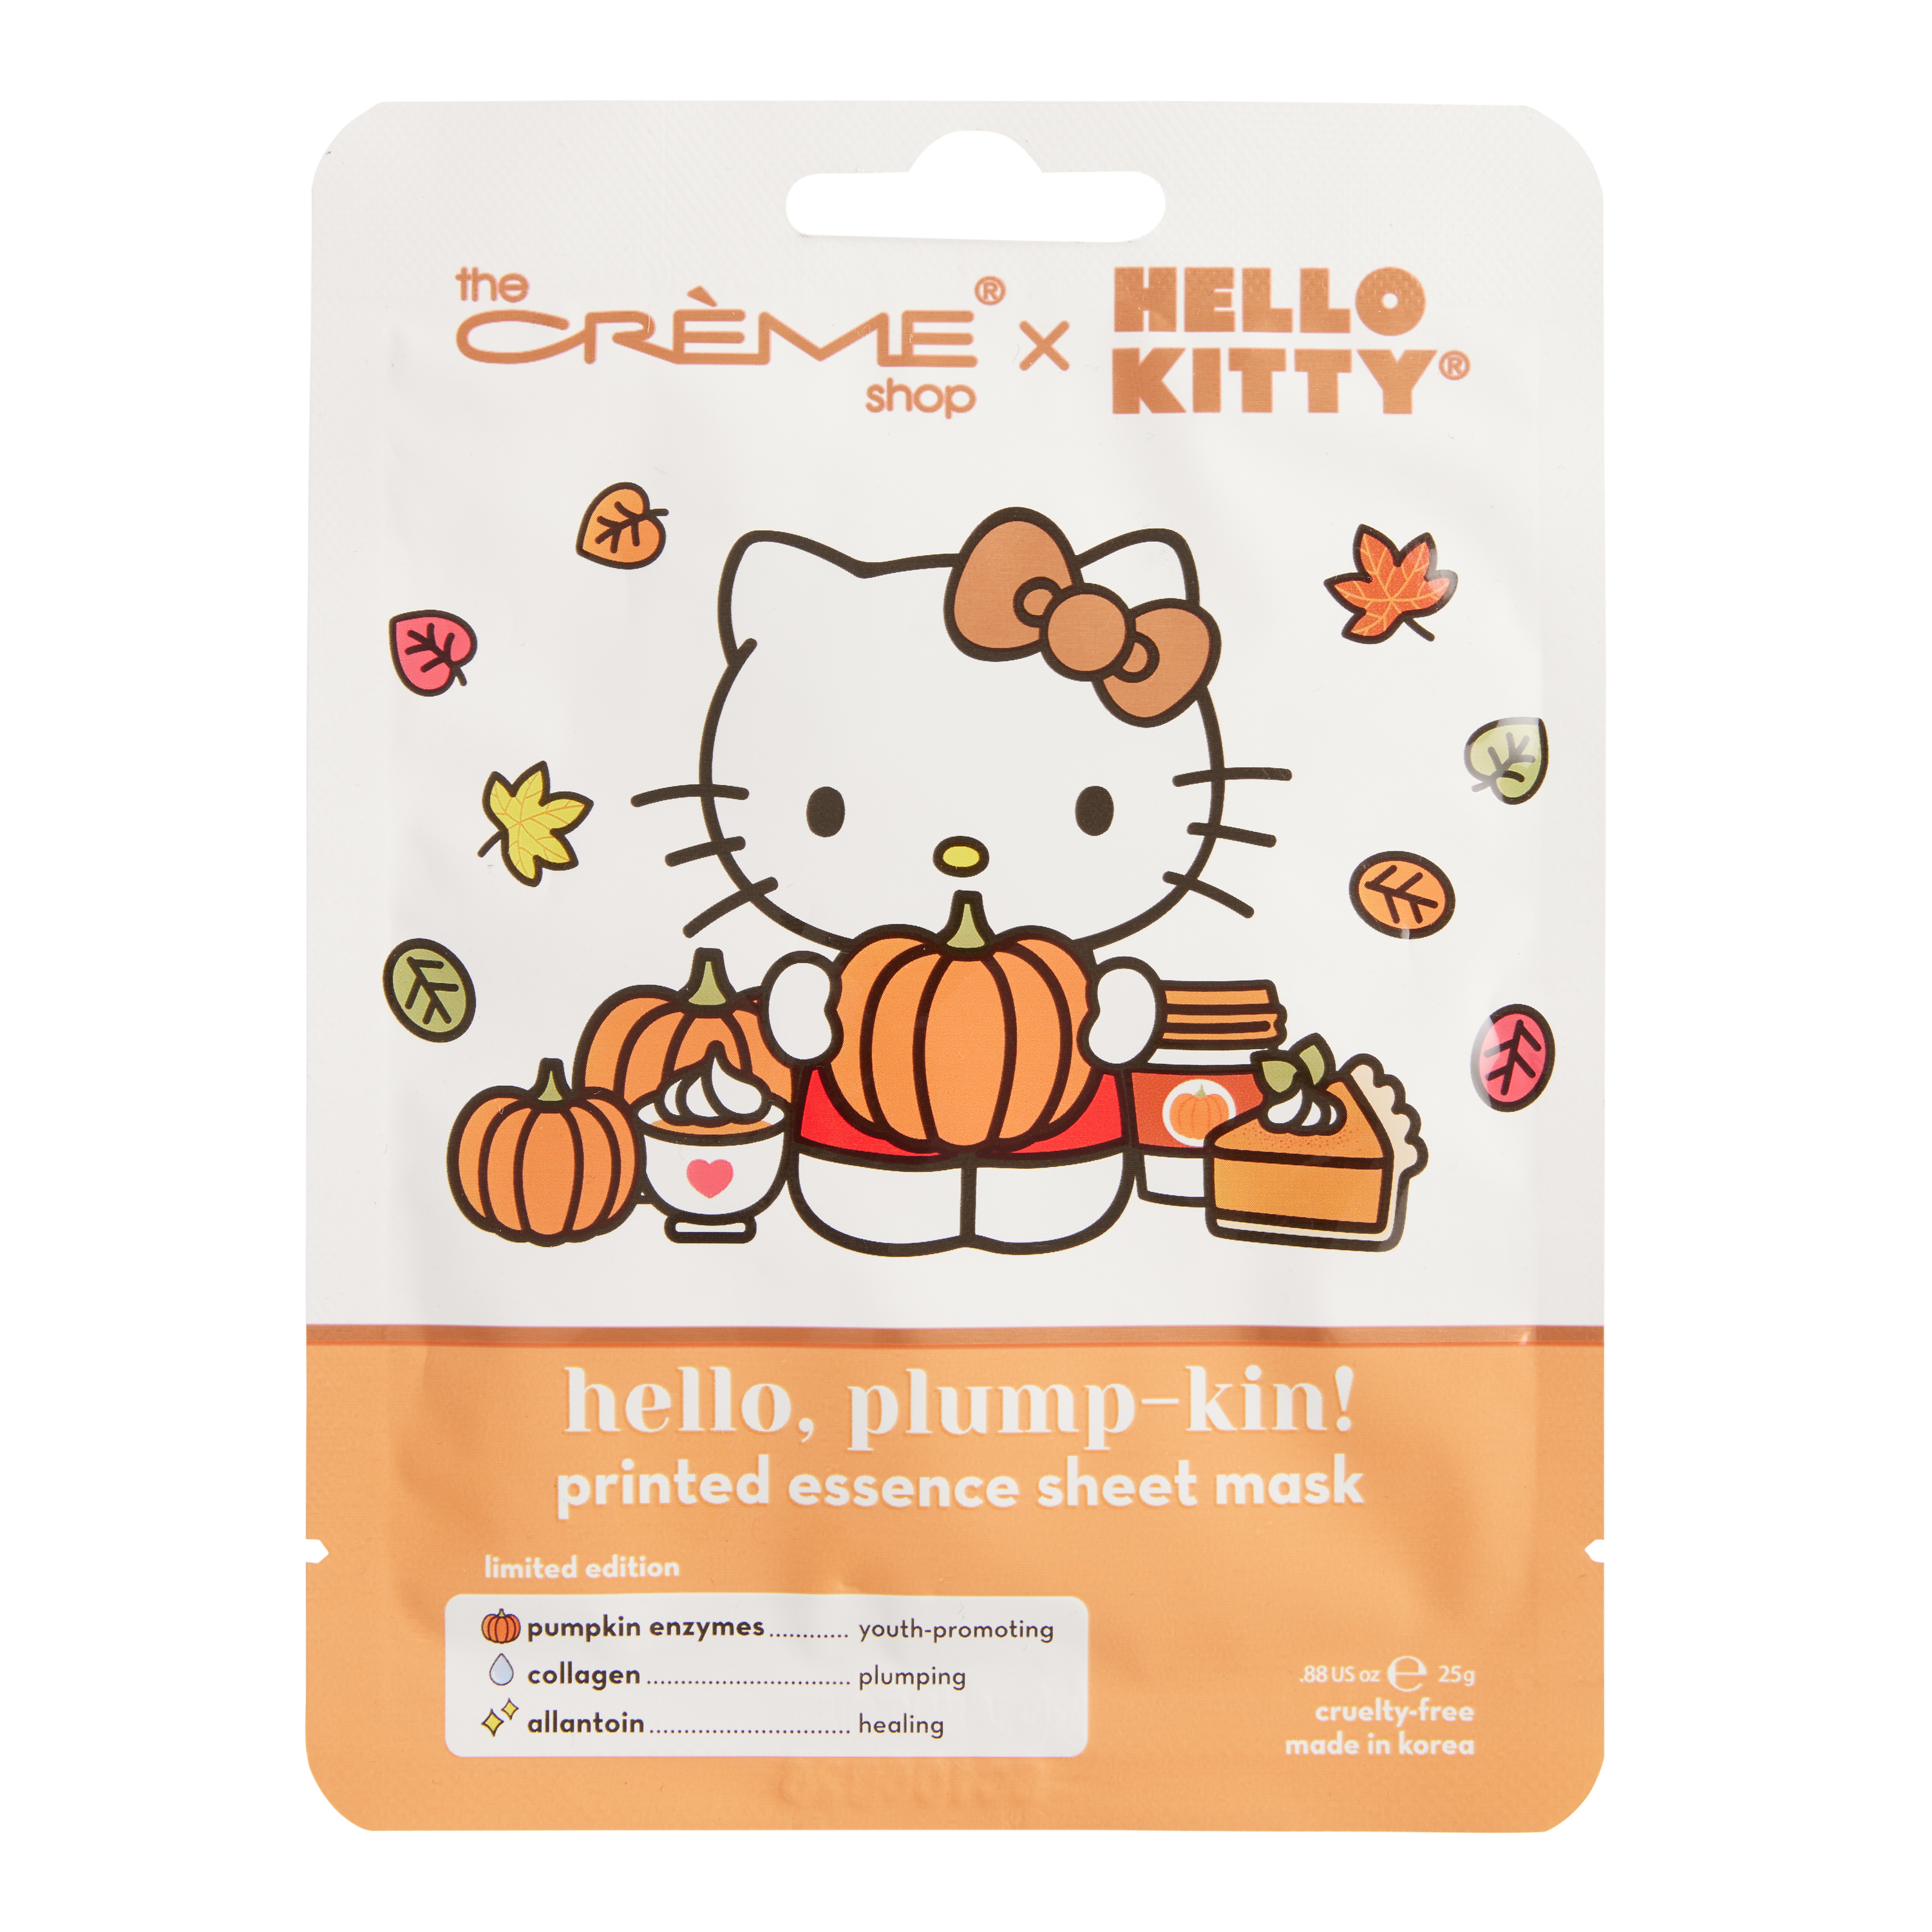 Creme Shop Hello Kitty Plumpkin Korean Beauty Sheet Mask - World Market